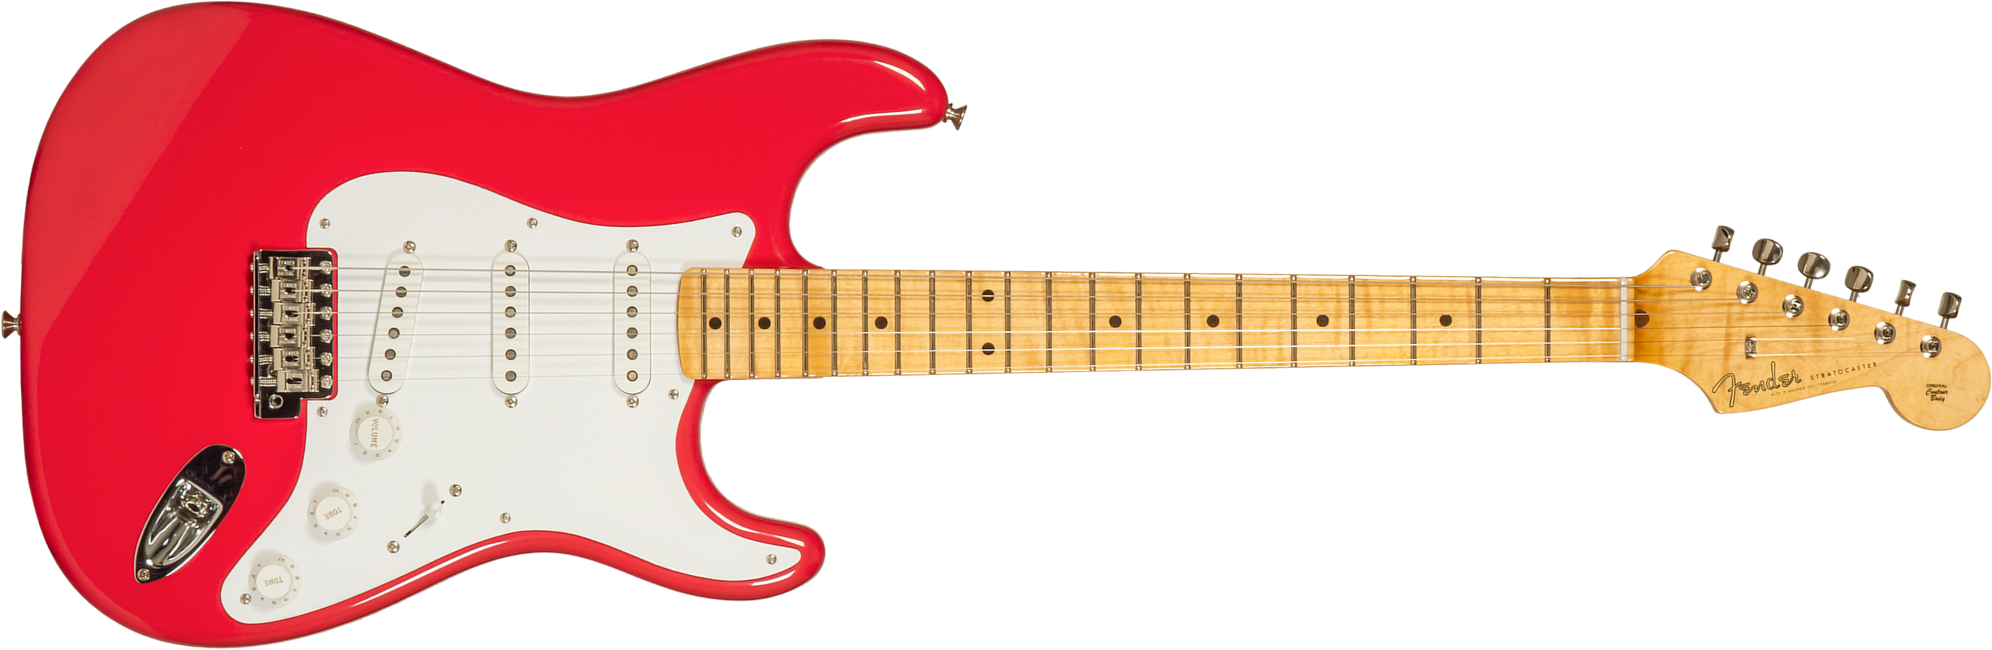 Fender Custom Shop Strat 1956 3s Trem Mn #r133022 - Nos Fiesta Red - Str shape electric guitar - Main picture